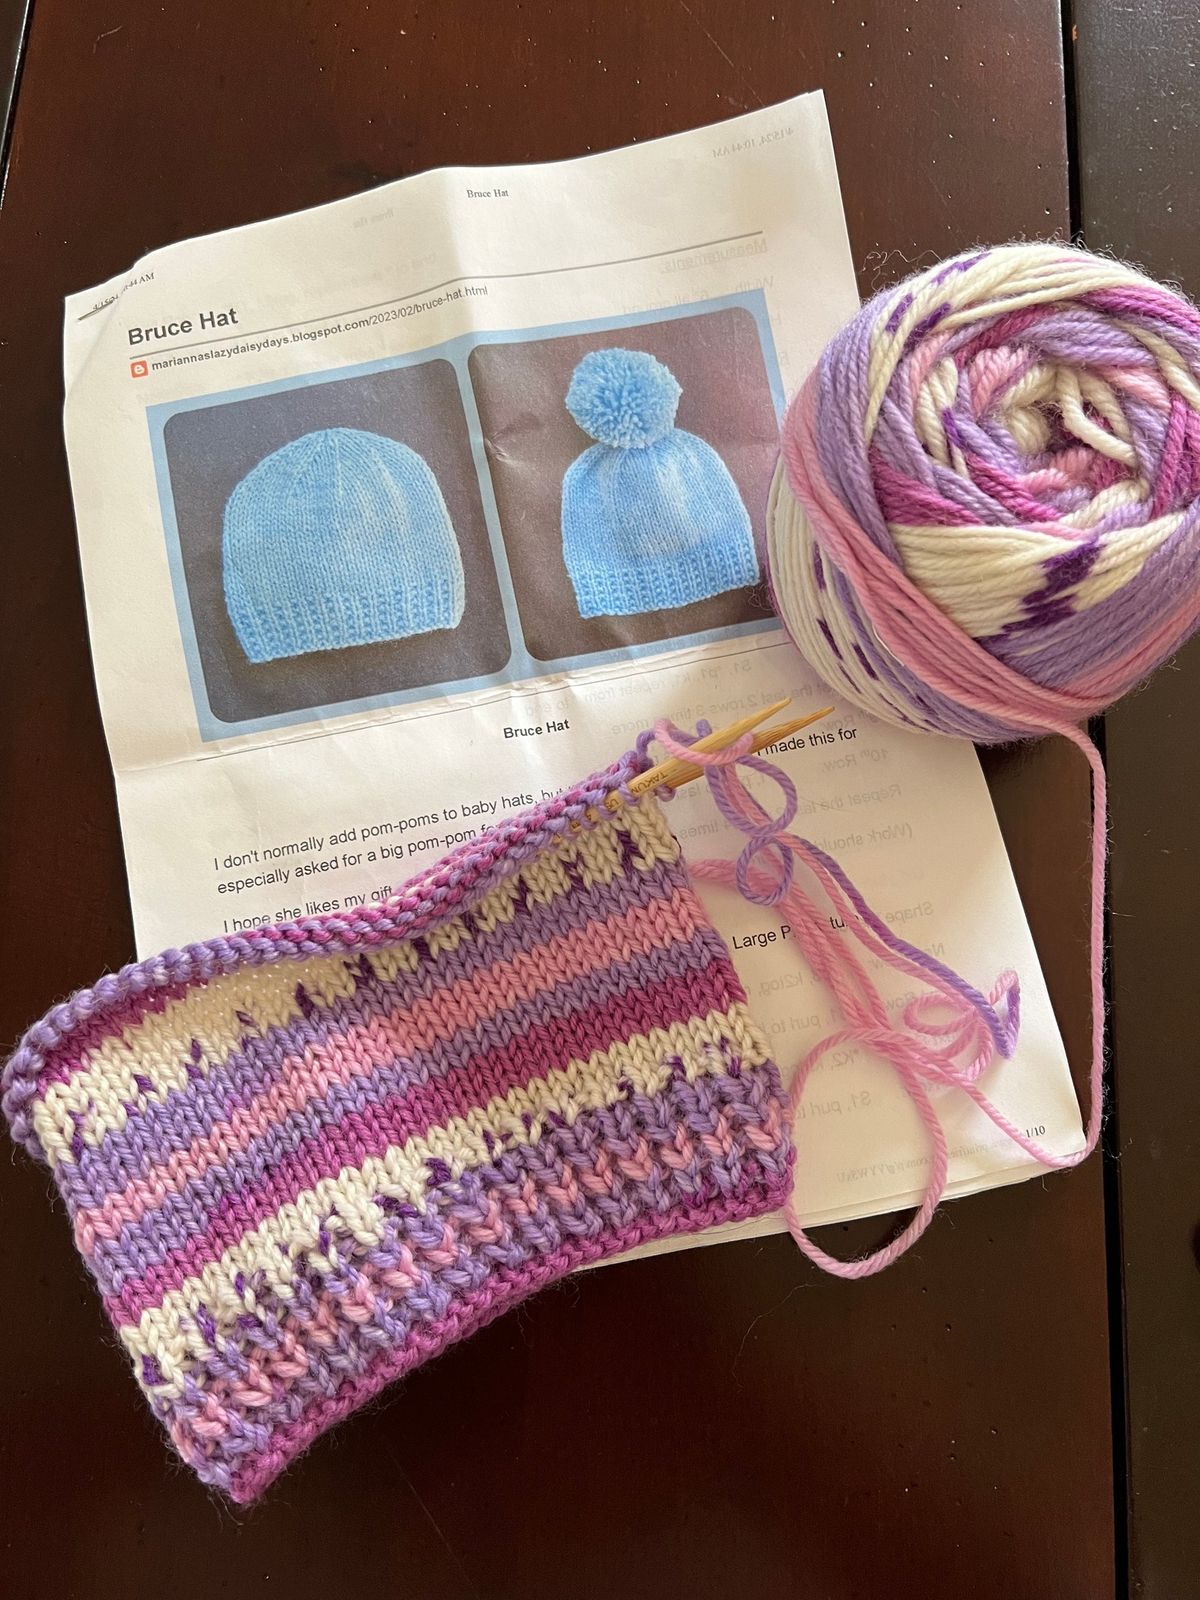 Social Charity Knitting and Crocheting for Preemies